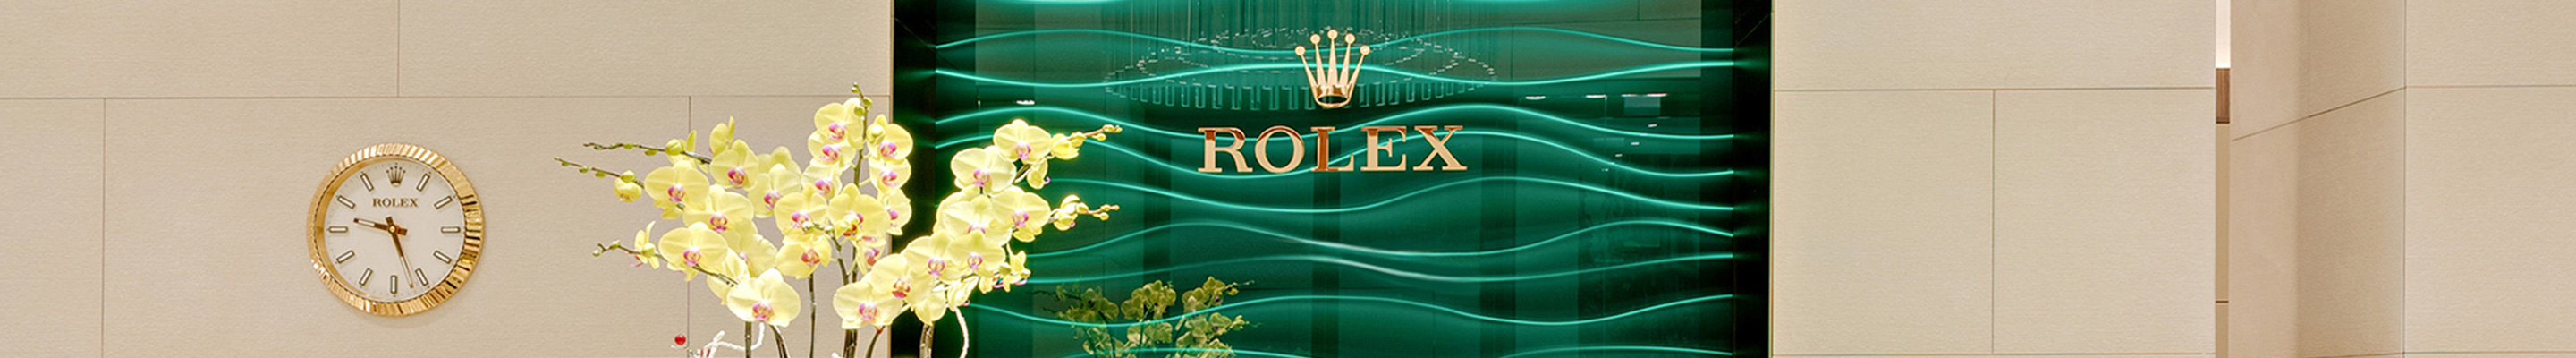 Contact Crisson, Official Rolex Jeweler - Bermuda